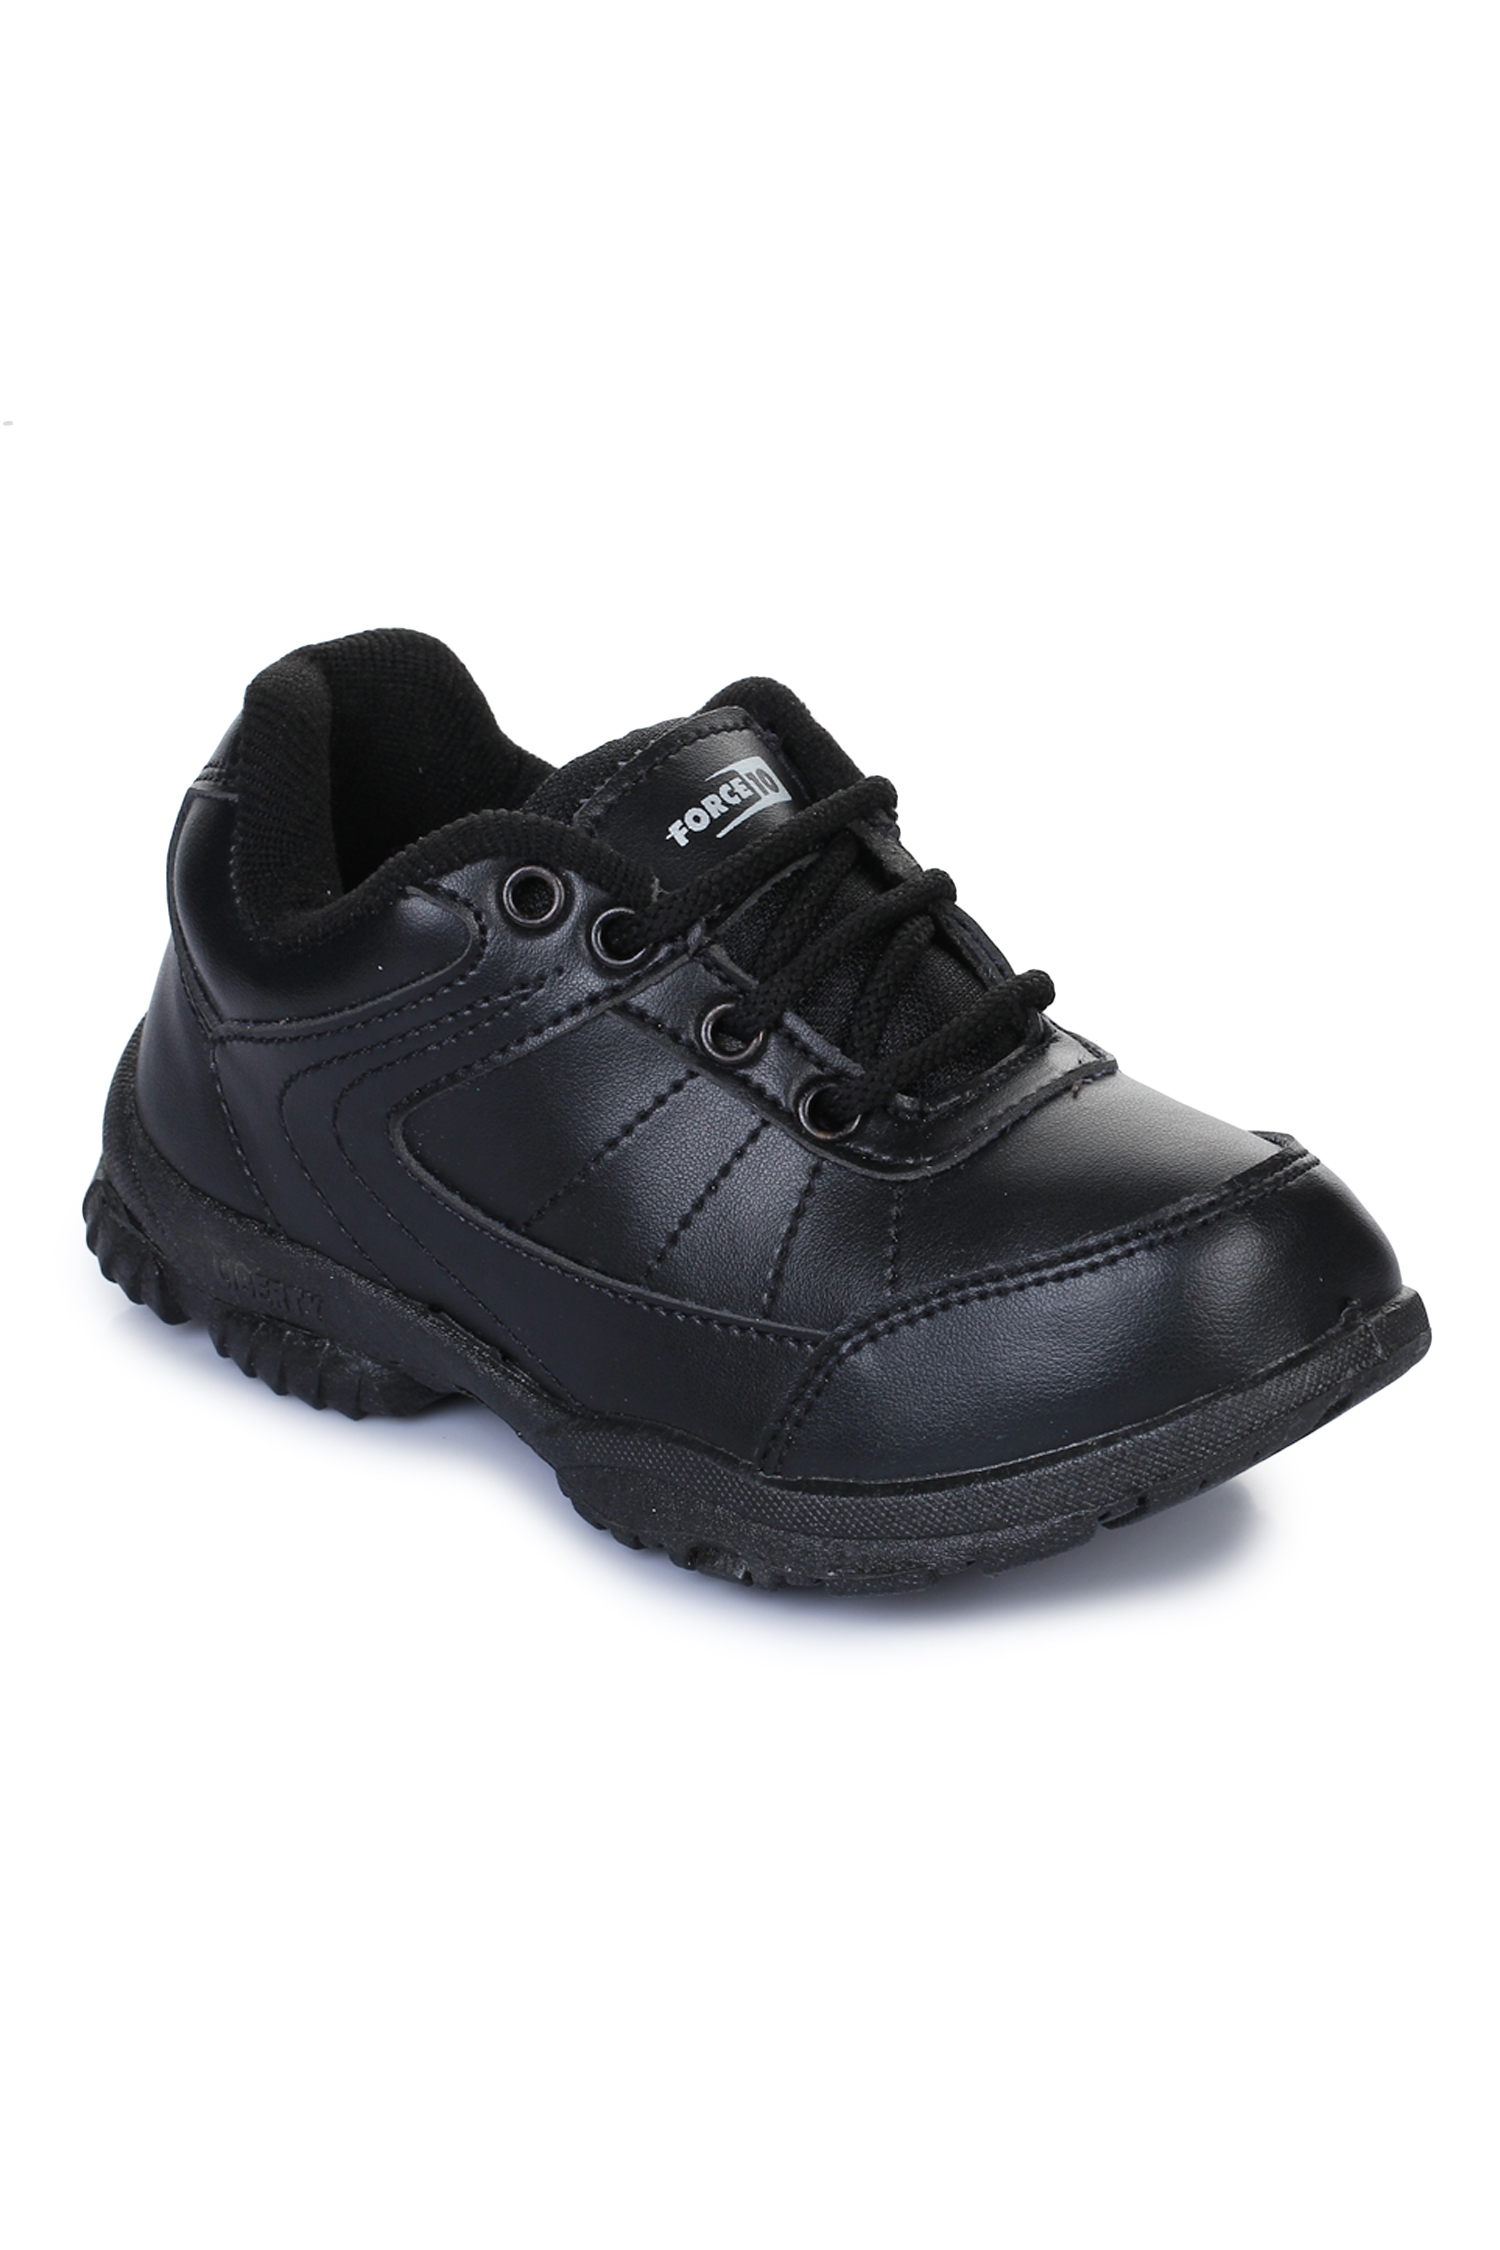 Liberty | Liberty FORCE 10 School Shoes SCHZONE_BLACK For - Men